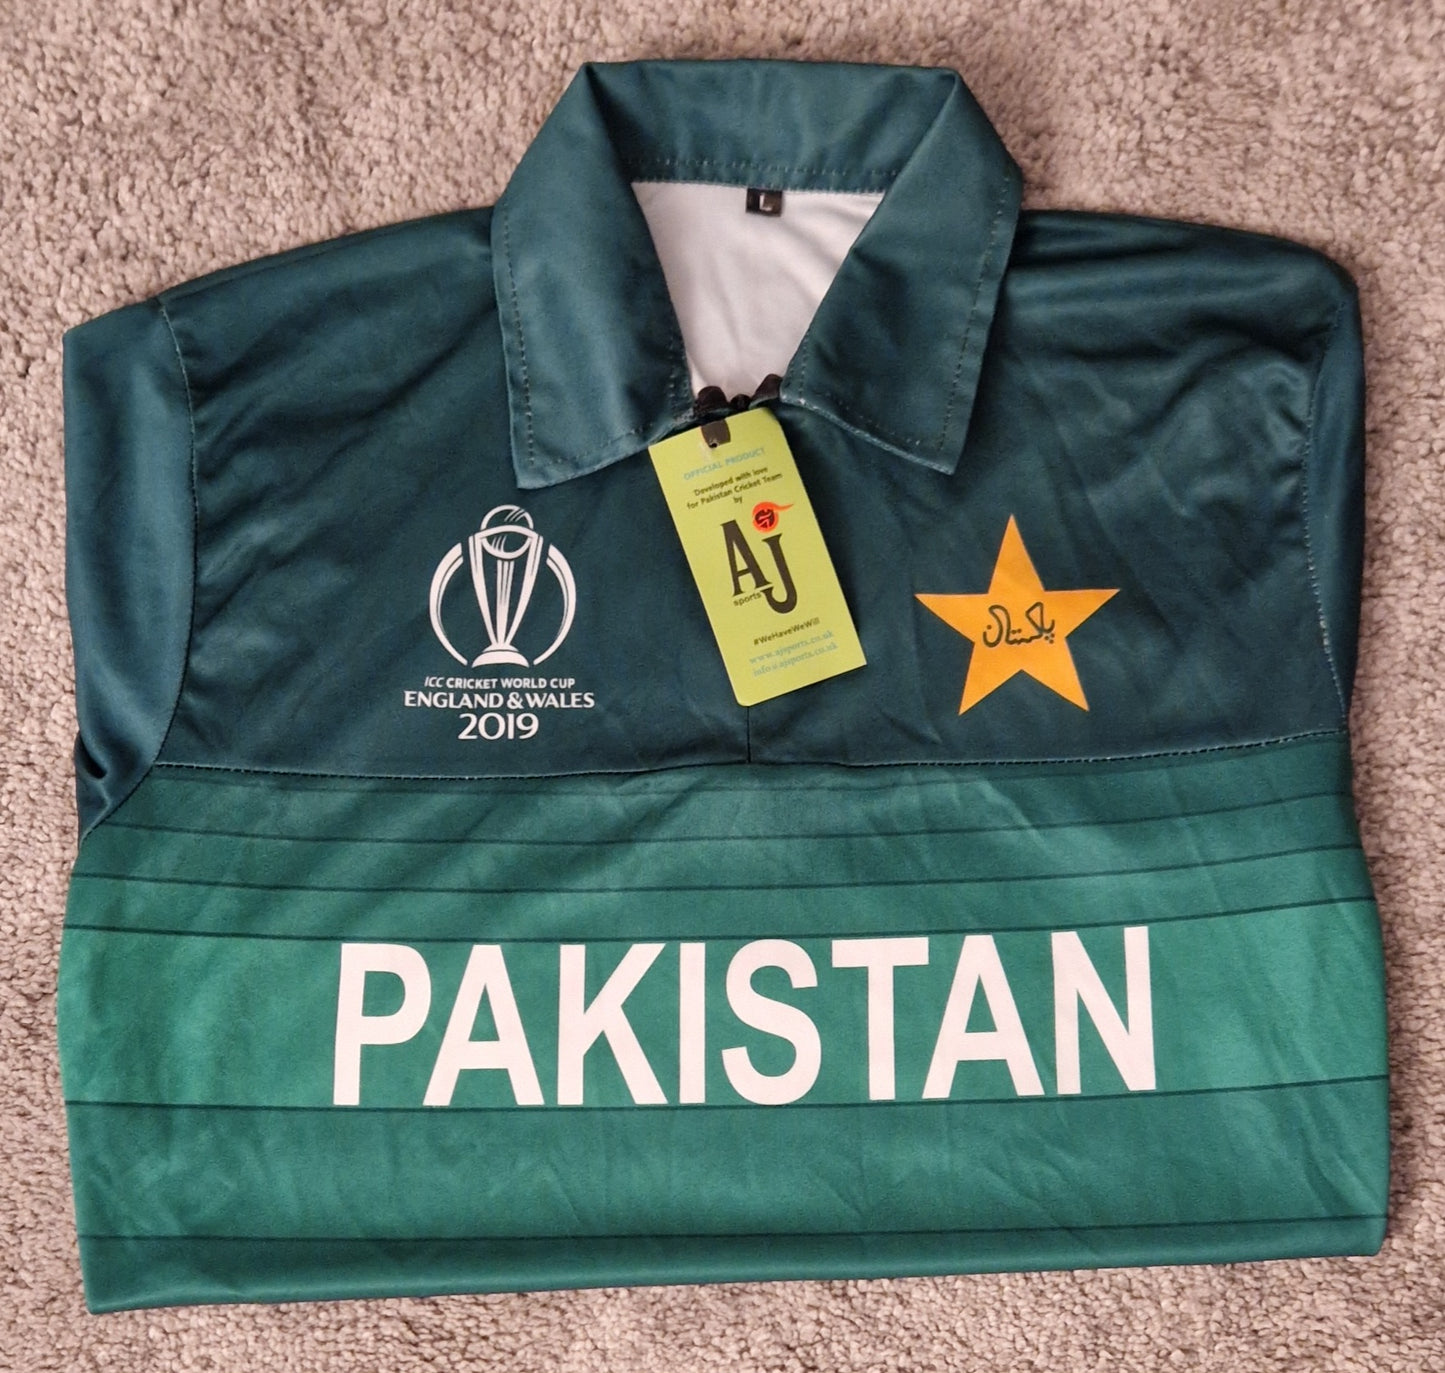 Pakistan 2019 World cup shirt